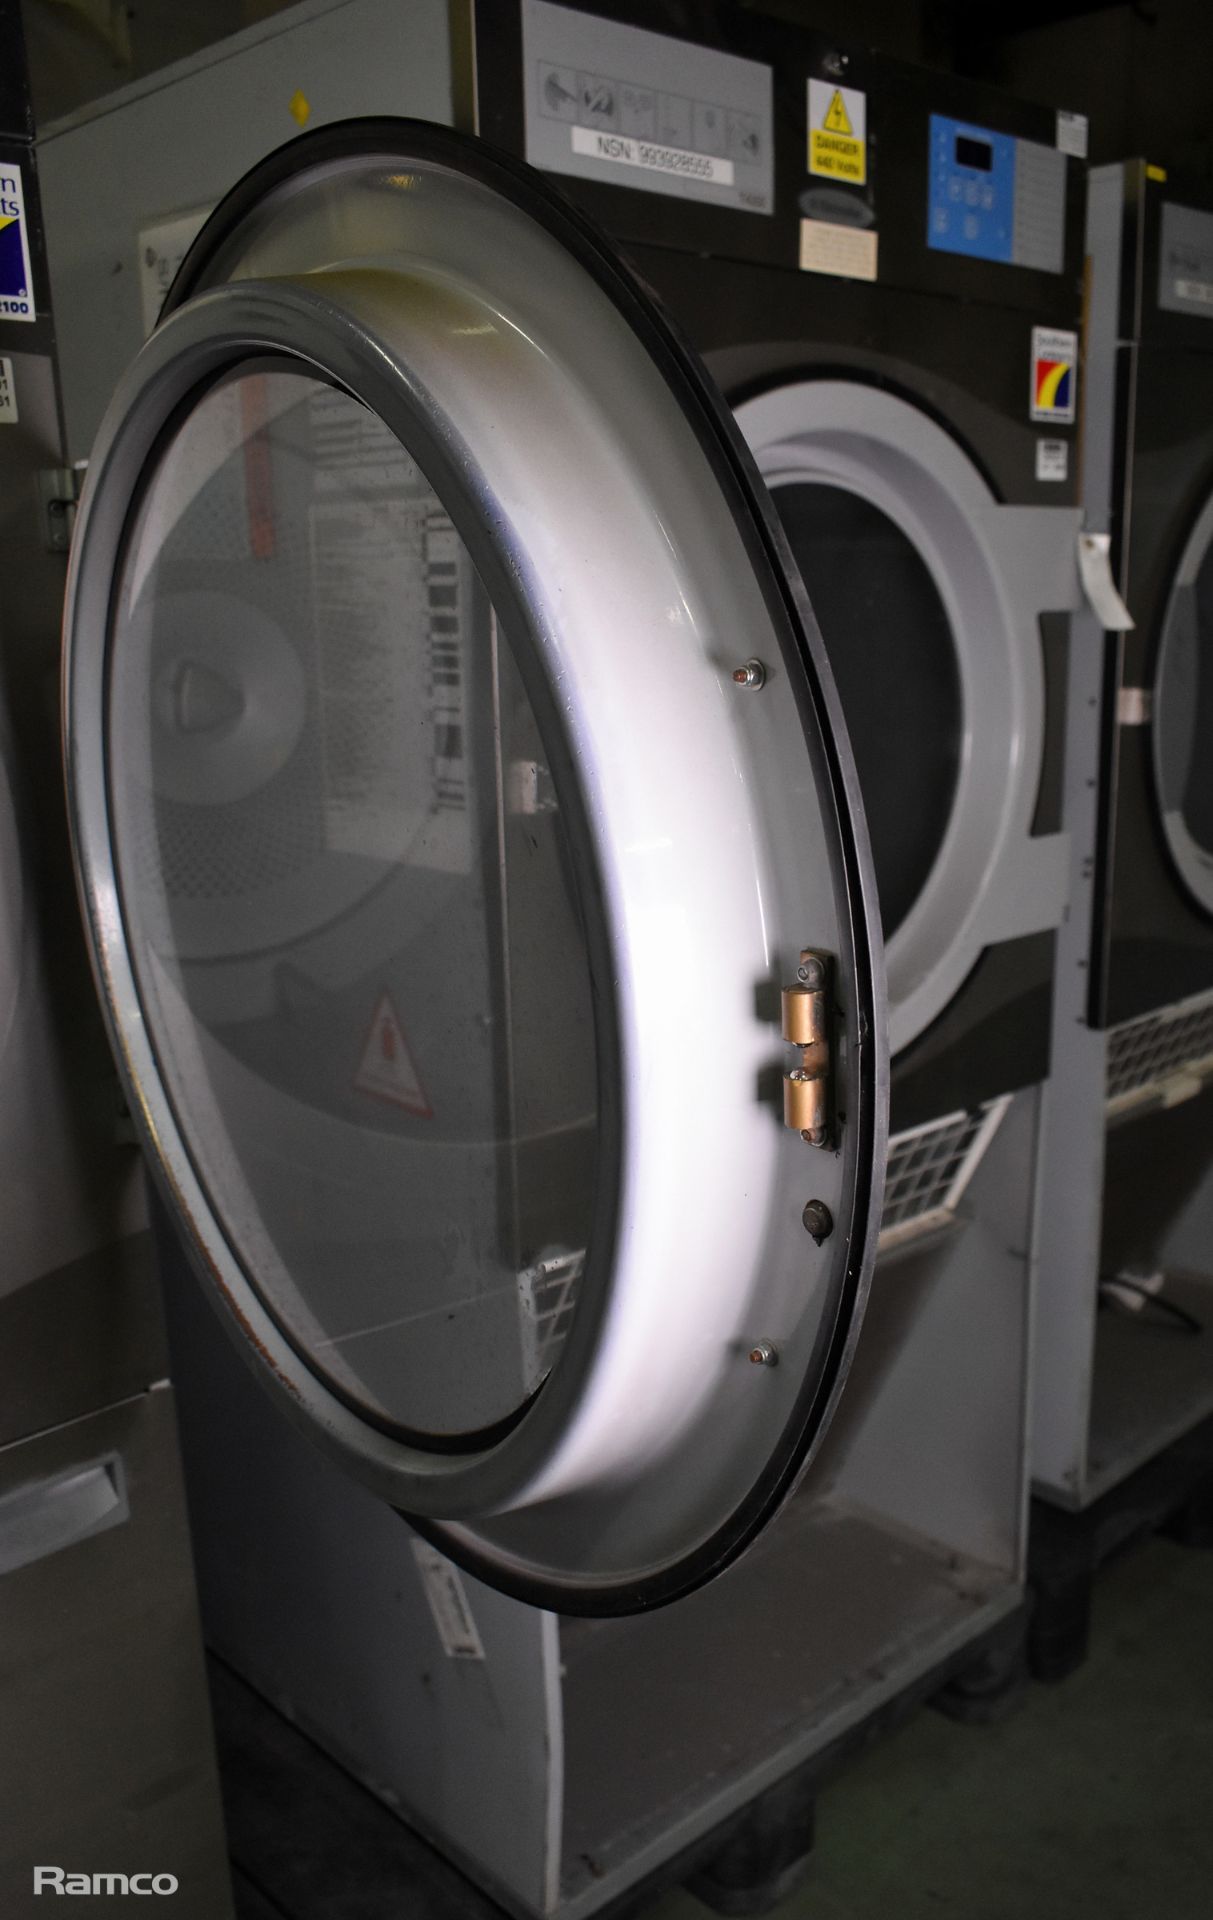 Electrolux T4350 professional tumble dryer - 349 litre drum volume - 3 phase 440V 60Hz - Image 5 of 7